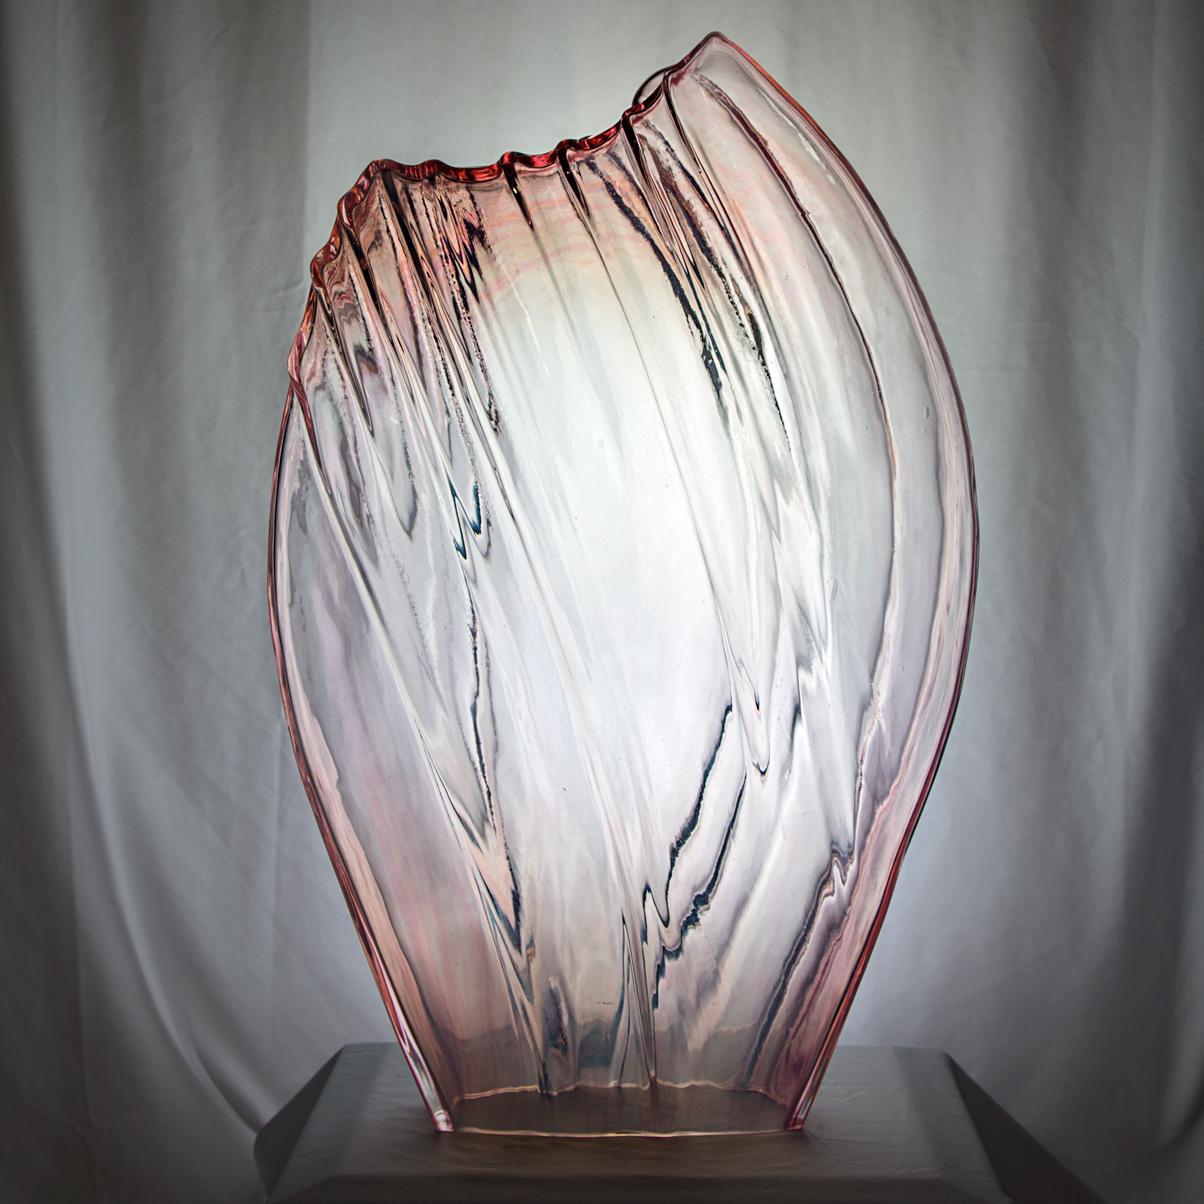 William Morris Figurative Sculpture - Standing Stone.  Contemporary blown glass art